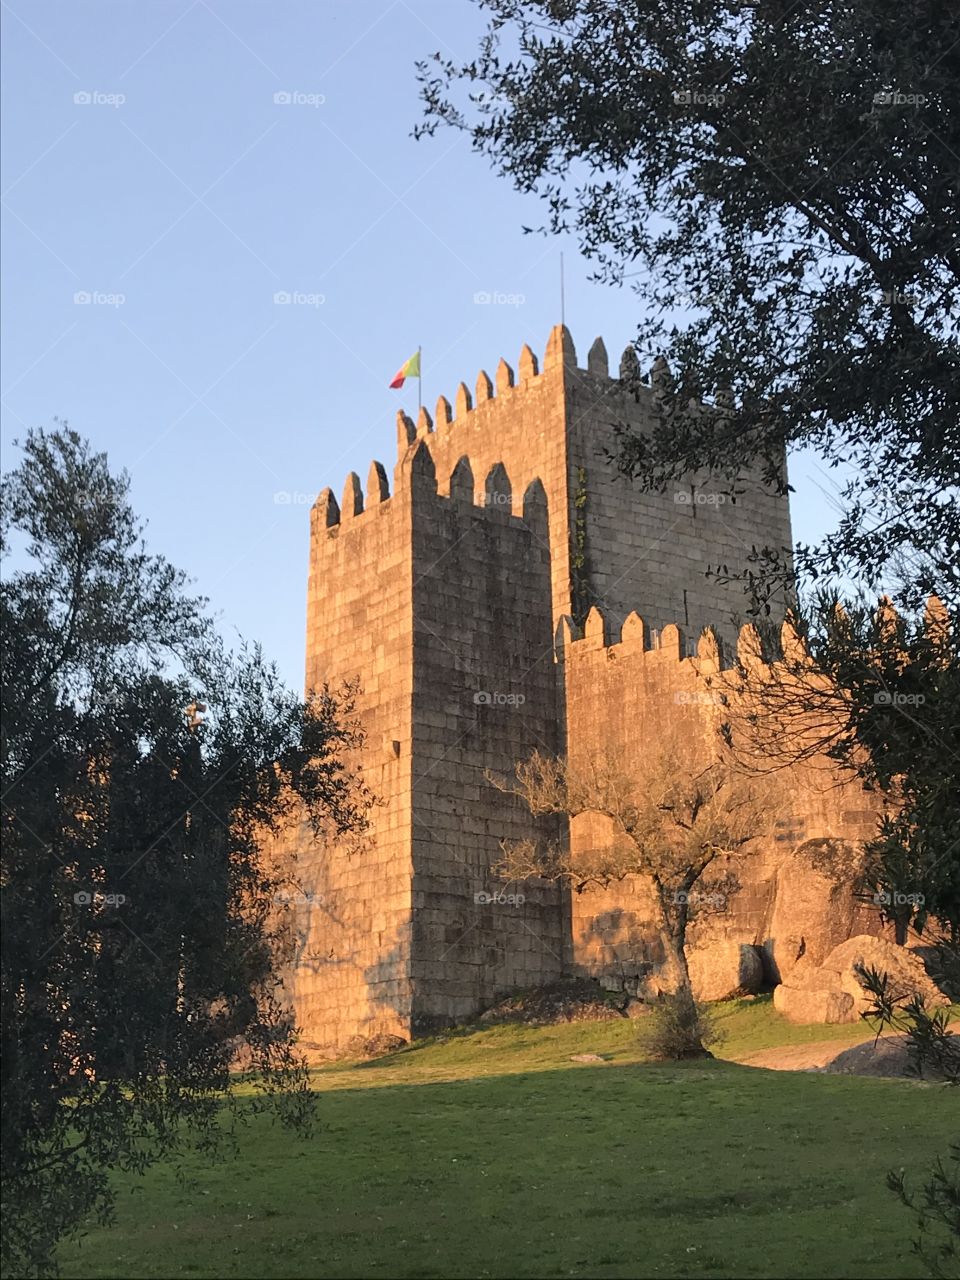 Castelo de Guimarães. Portugal. 